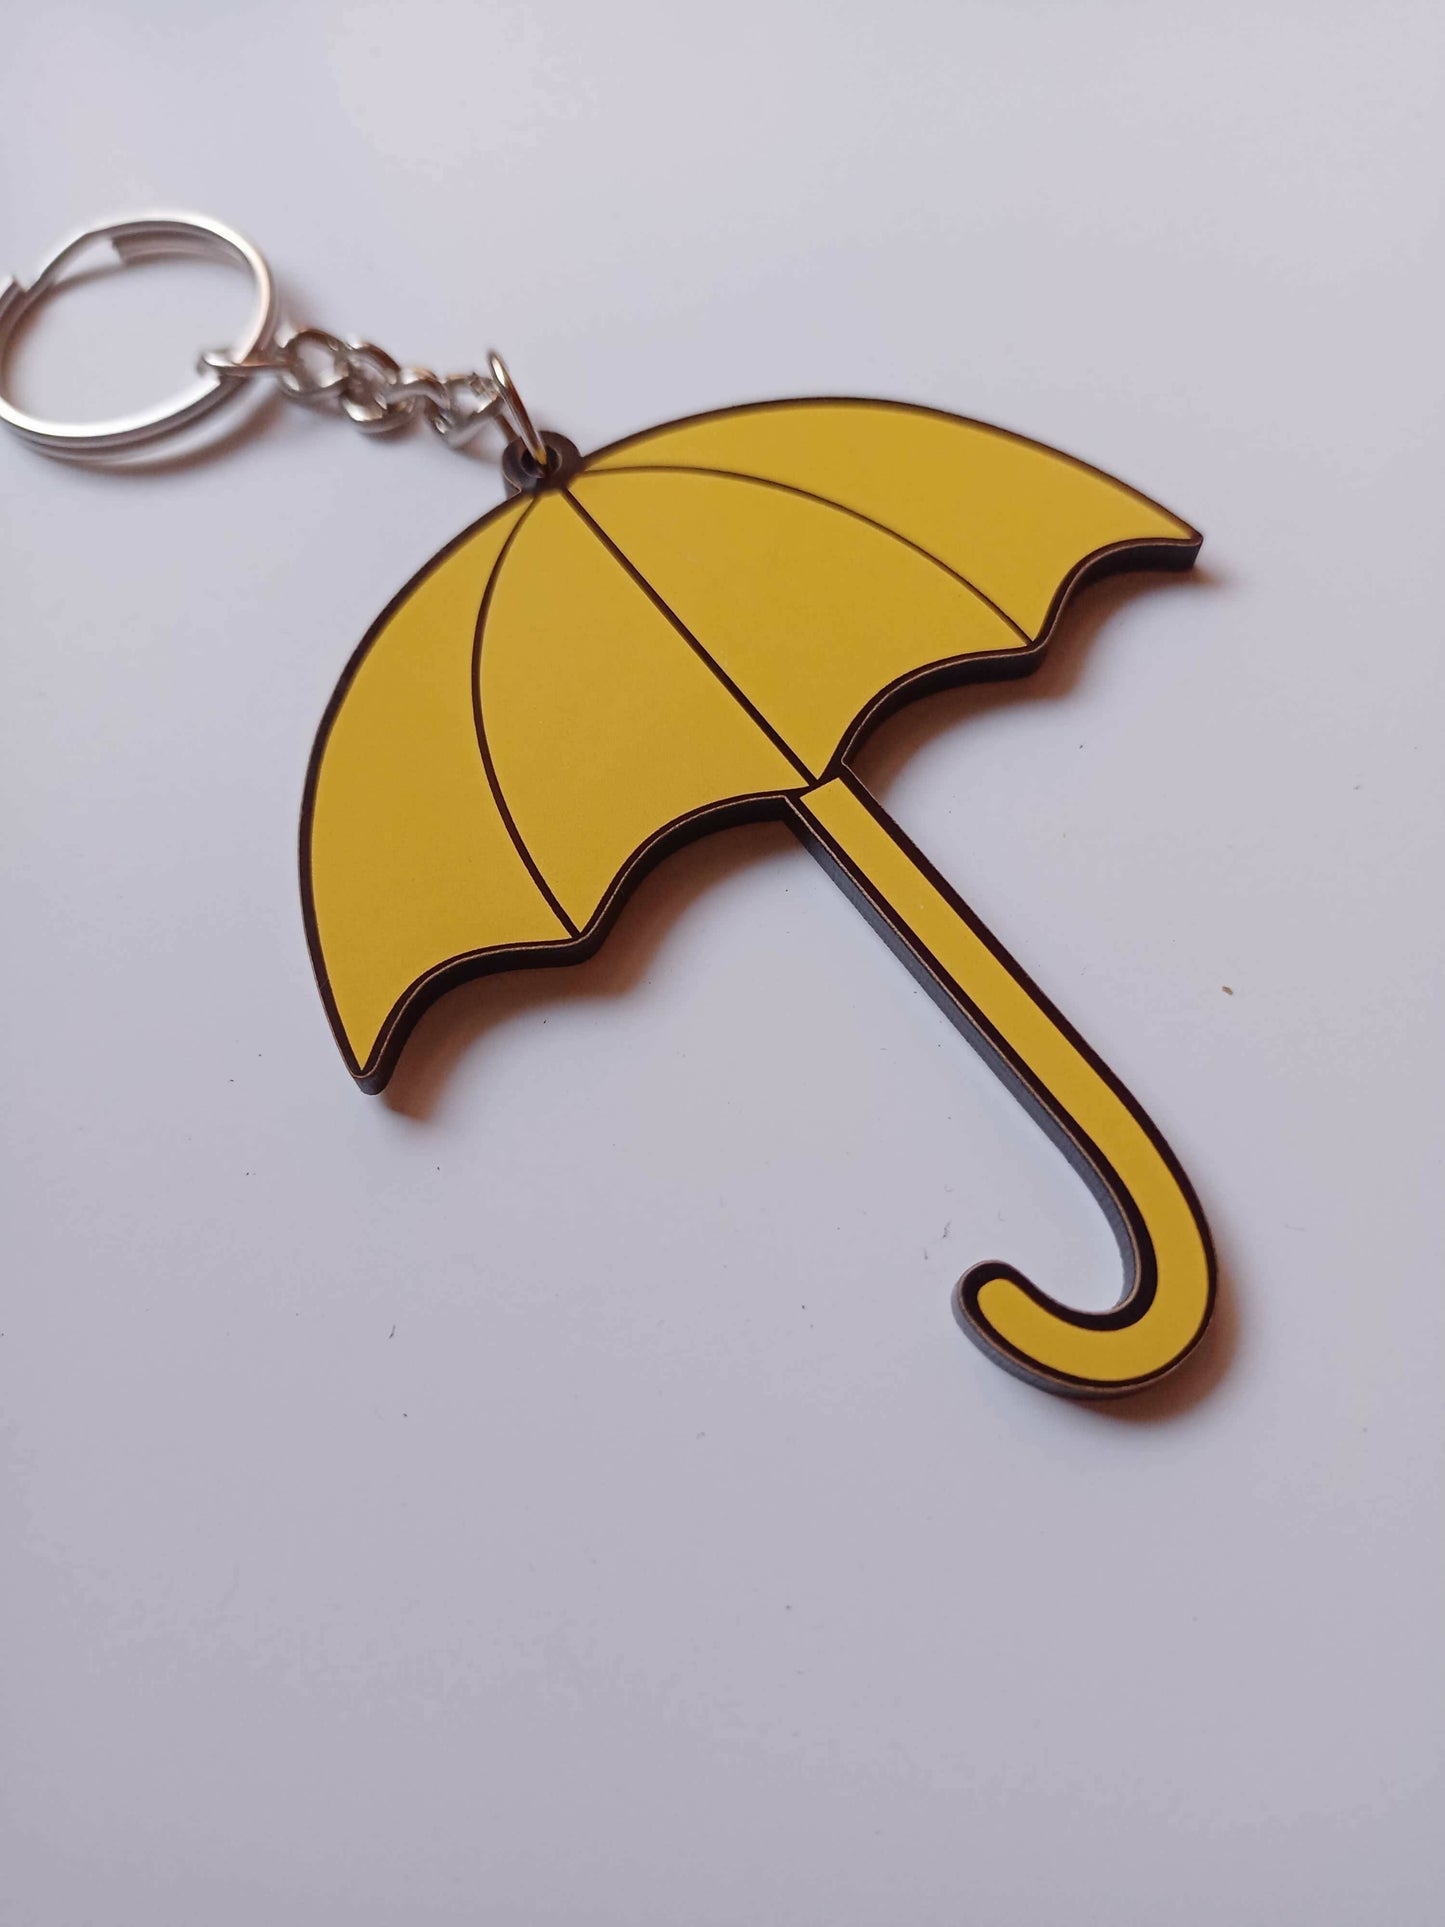 How I met your mother yellow umbrella keychain